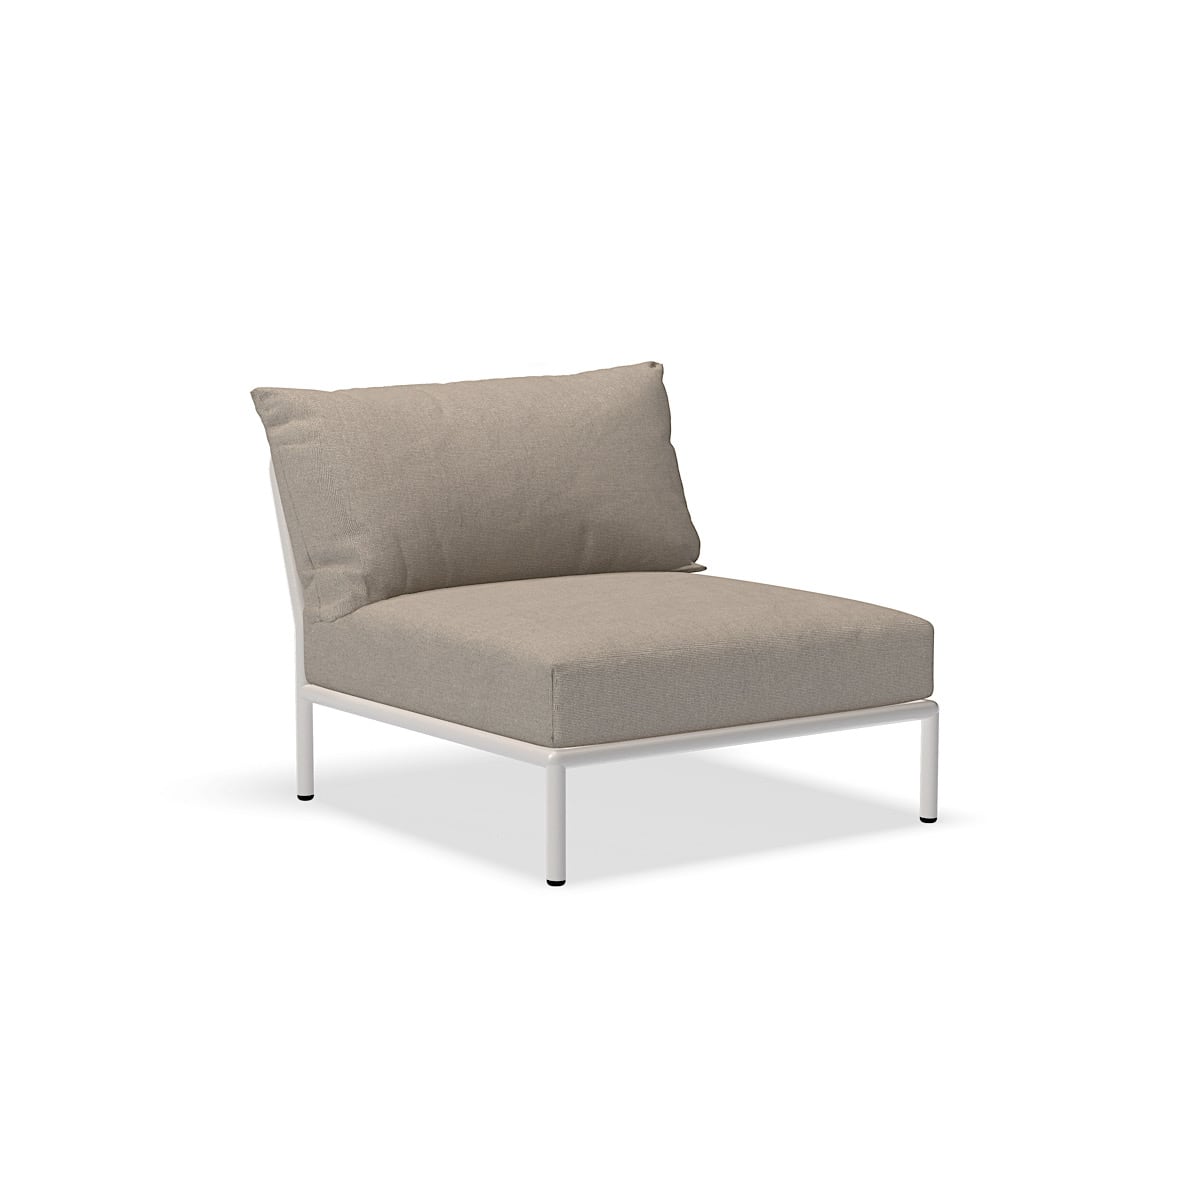 Cadeira - 22205-9243 - Cadeira, Ash (HERITAGE), estrutura branca